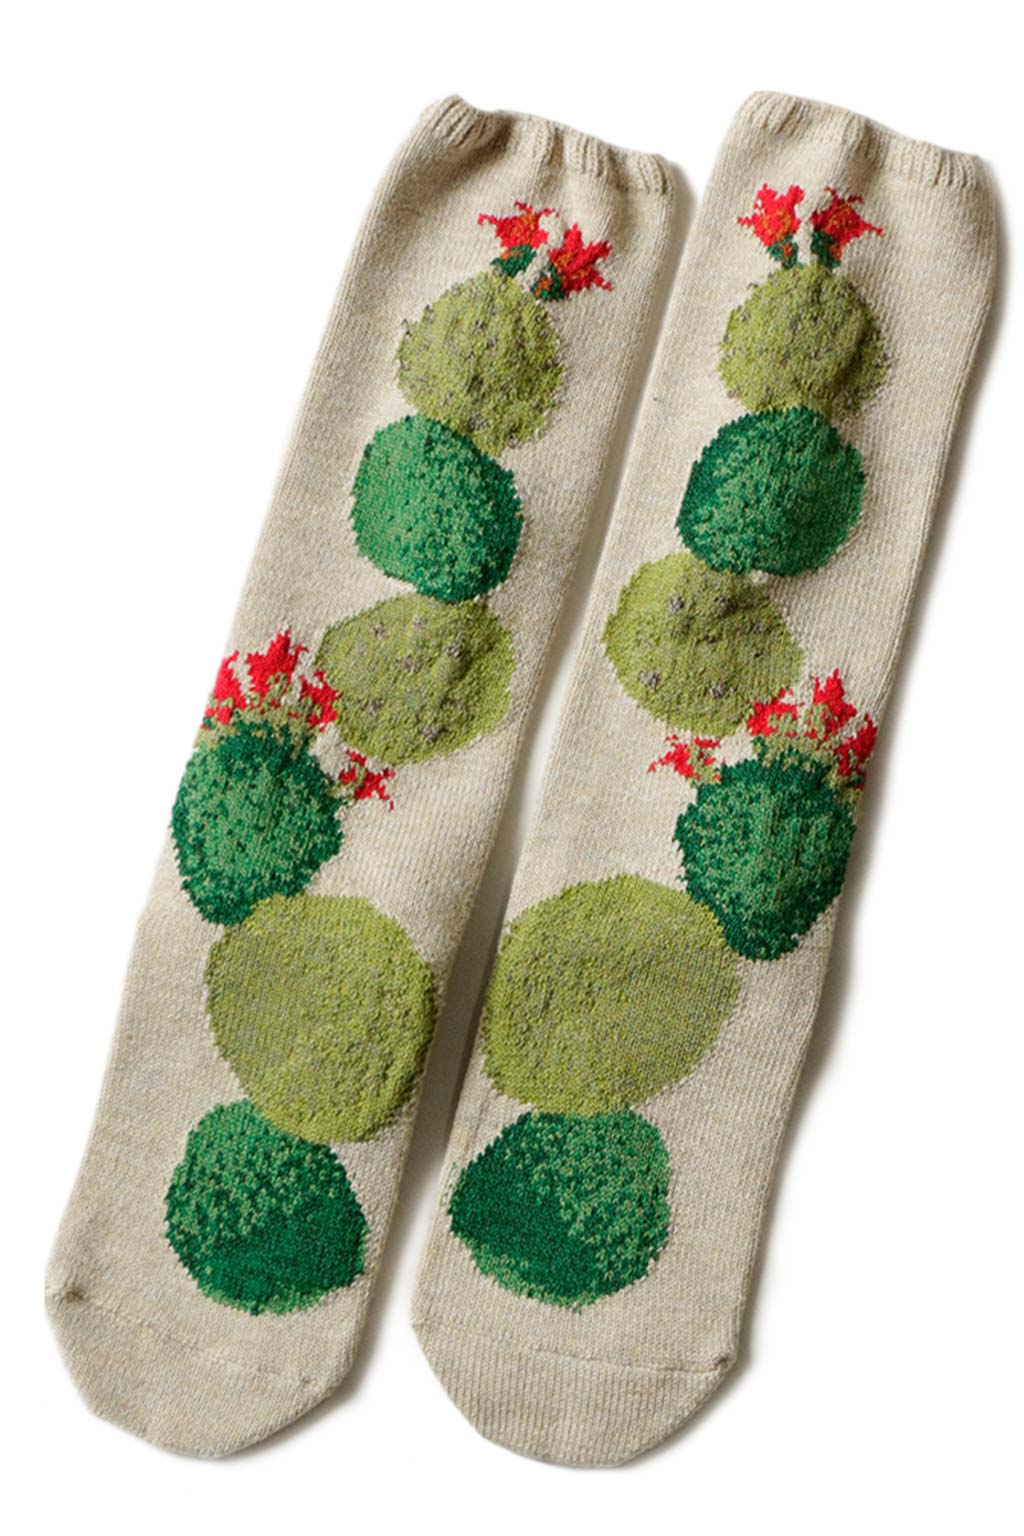 Kapital 96 Yarns Cactus Socks in 3 color Choices